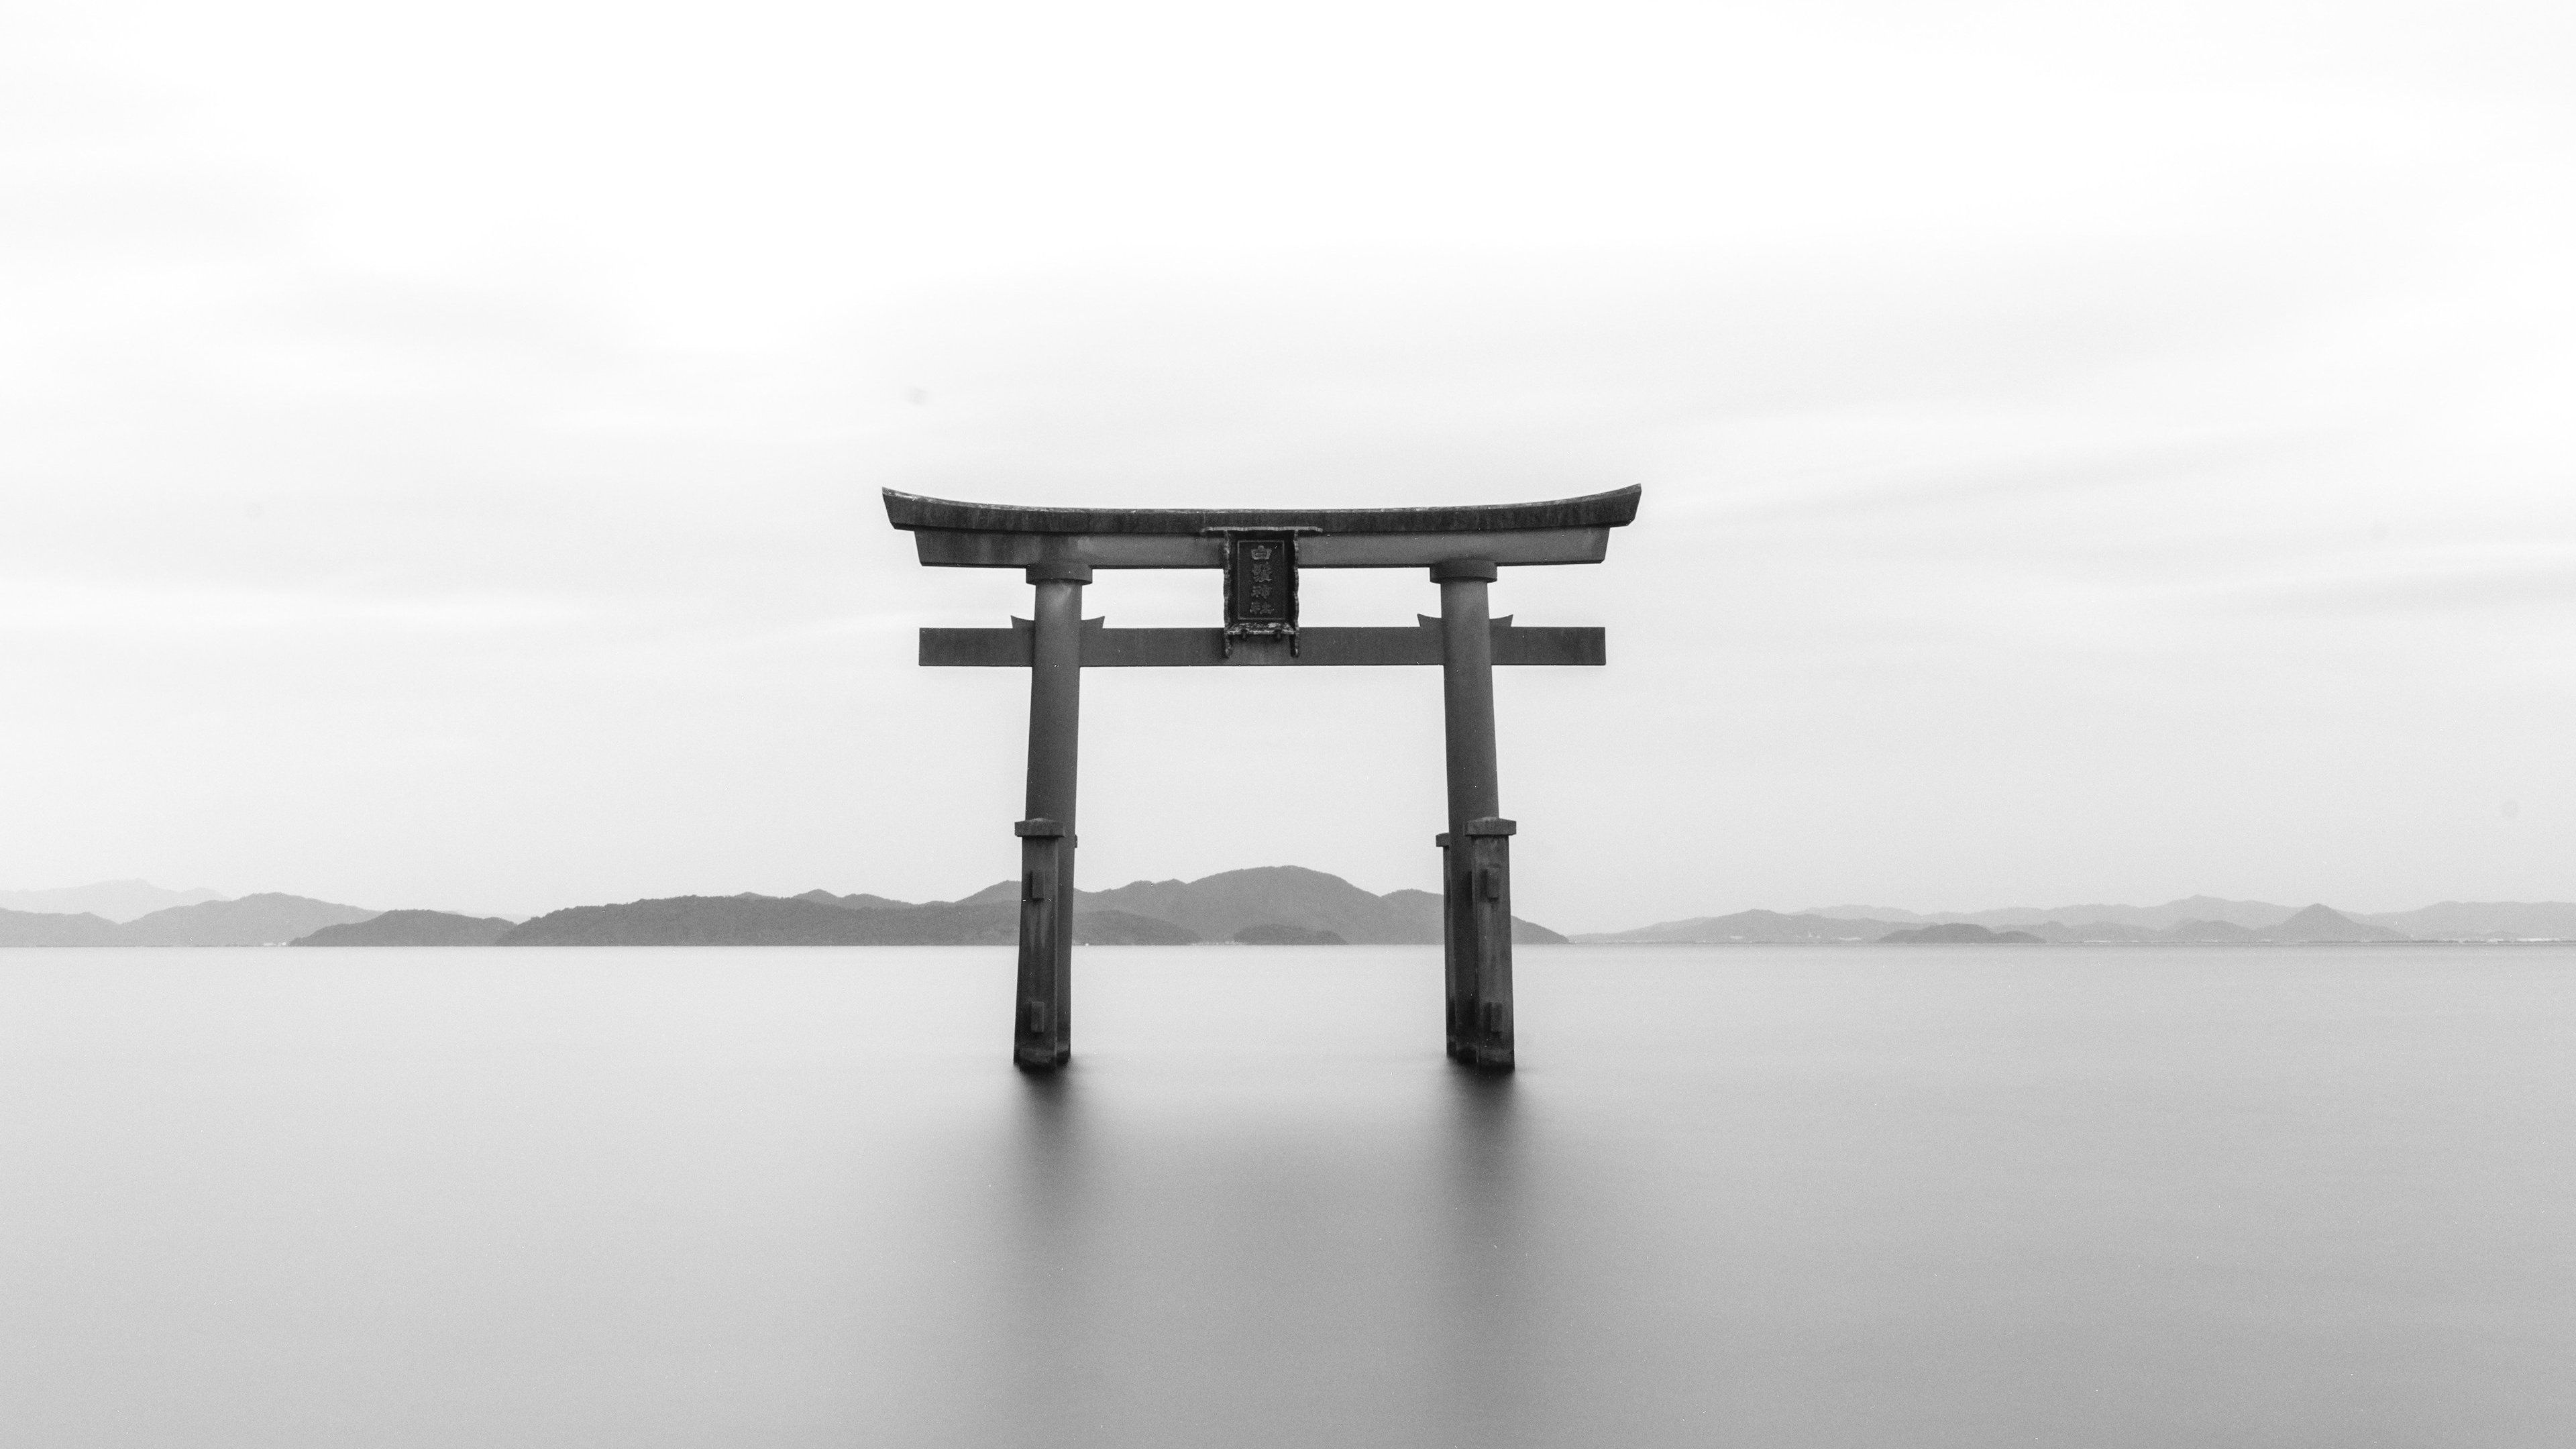 3840x2160 Zen Gate Tori Shrine Wallpaper - iPhone, Android & Desktop Ba...